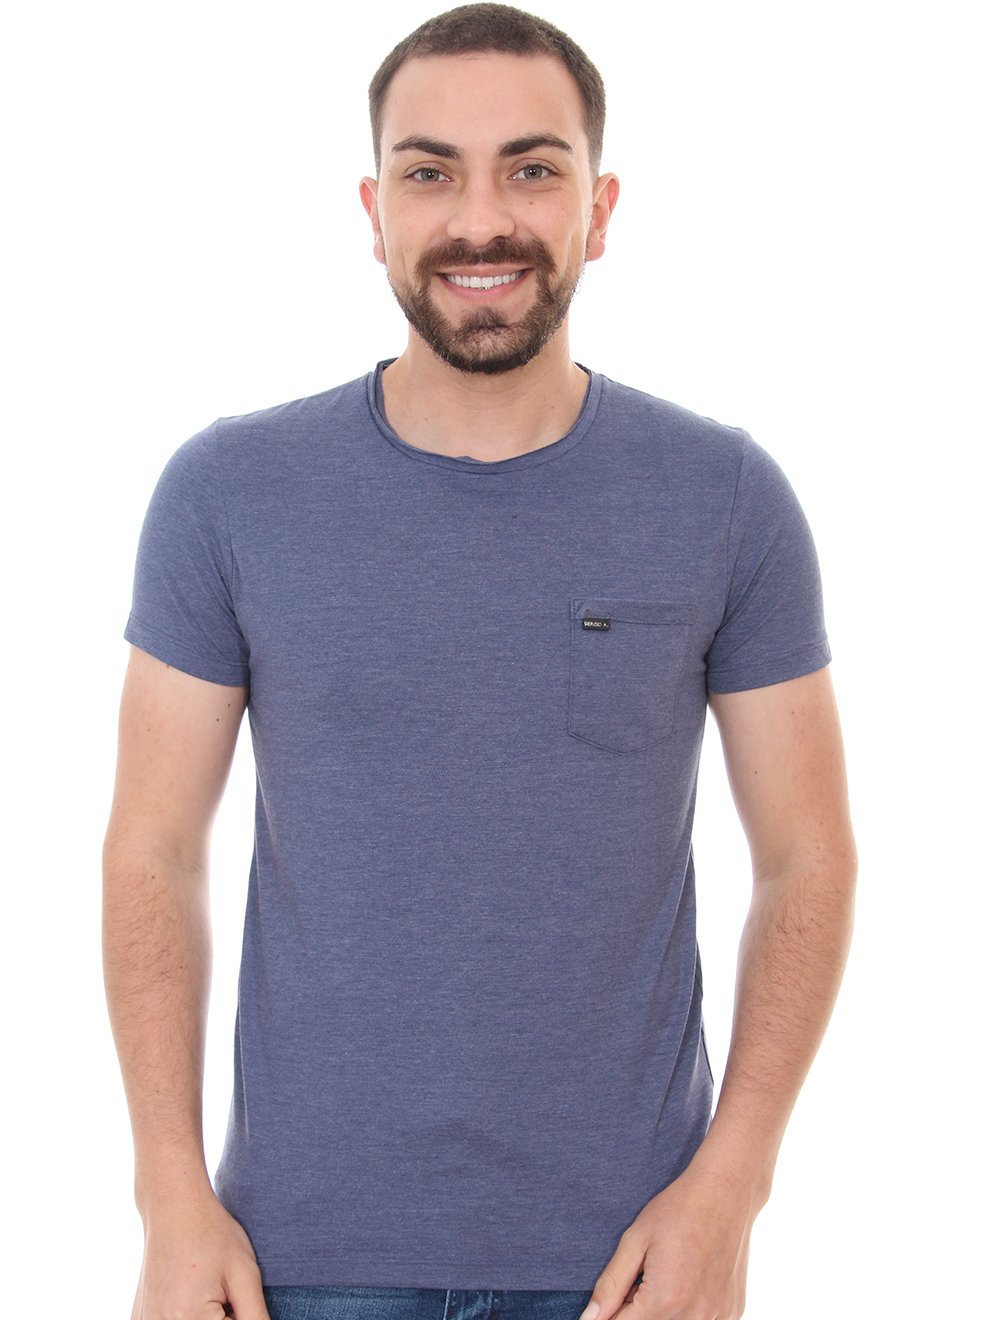 Camiseta Sergio K Masculina Back To Basics Pocket Azul Mescla